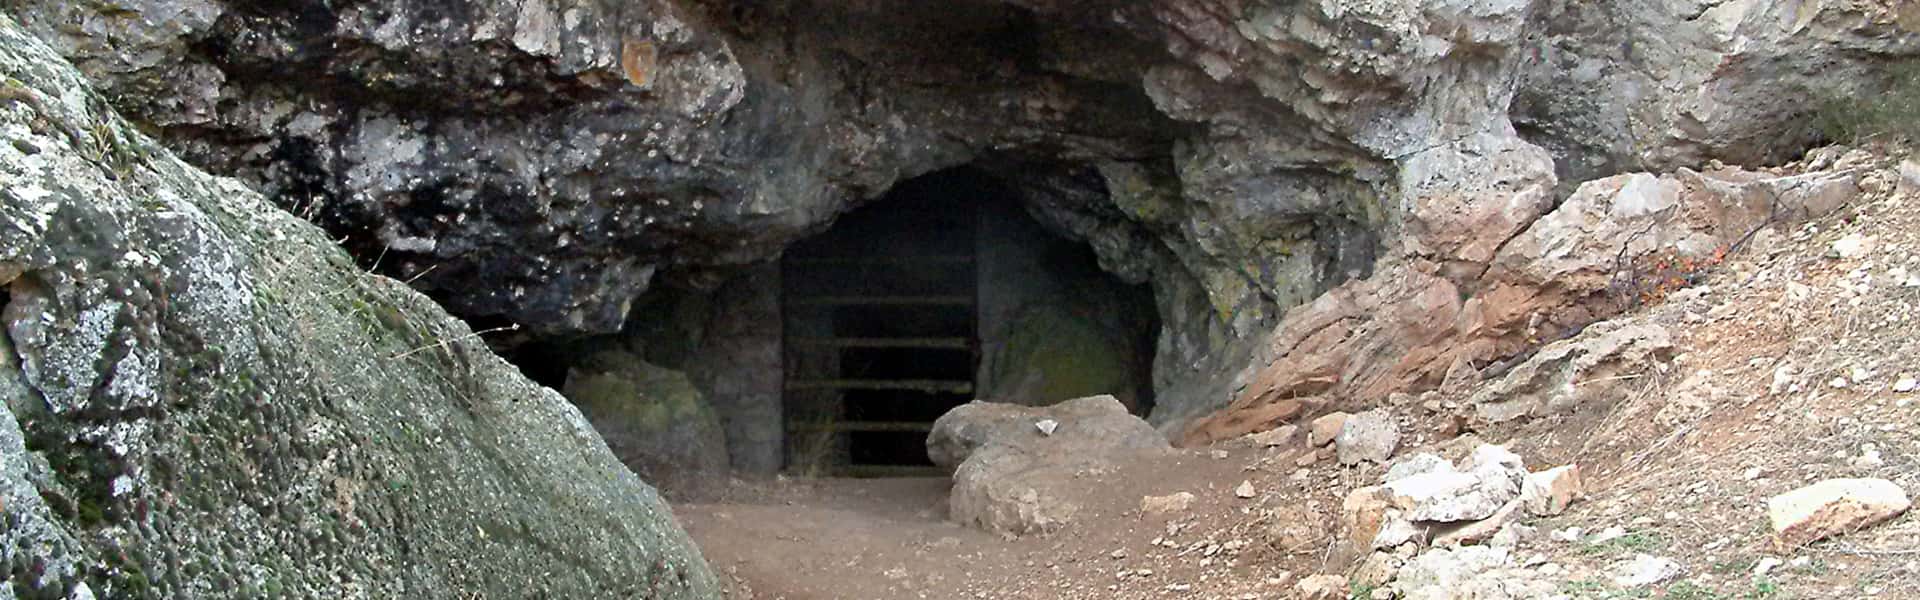 Cyclops Polyphemus cave